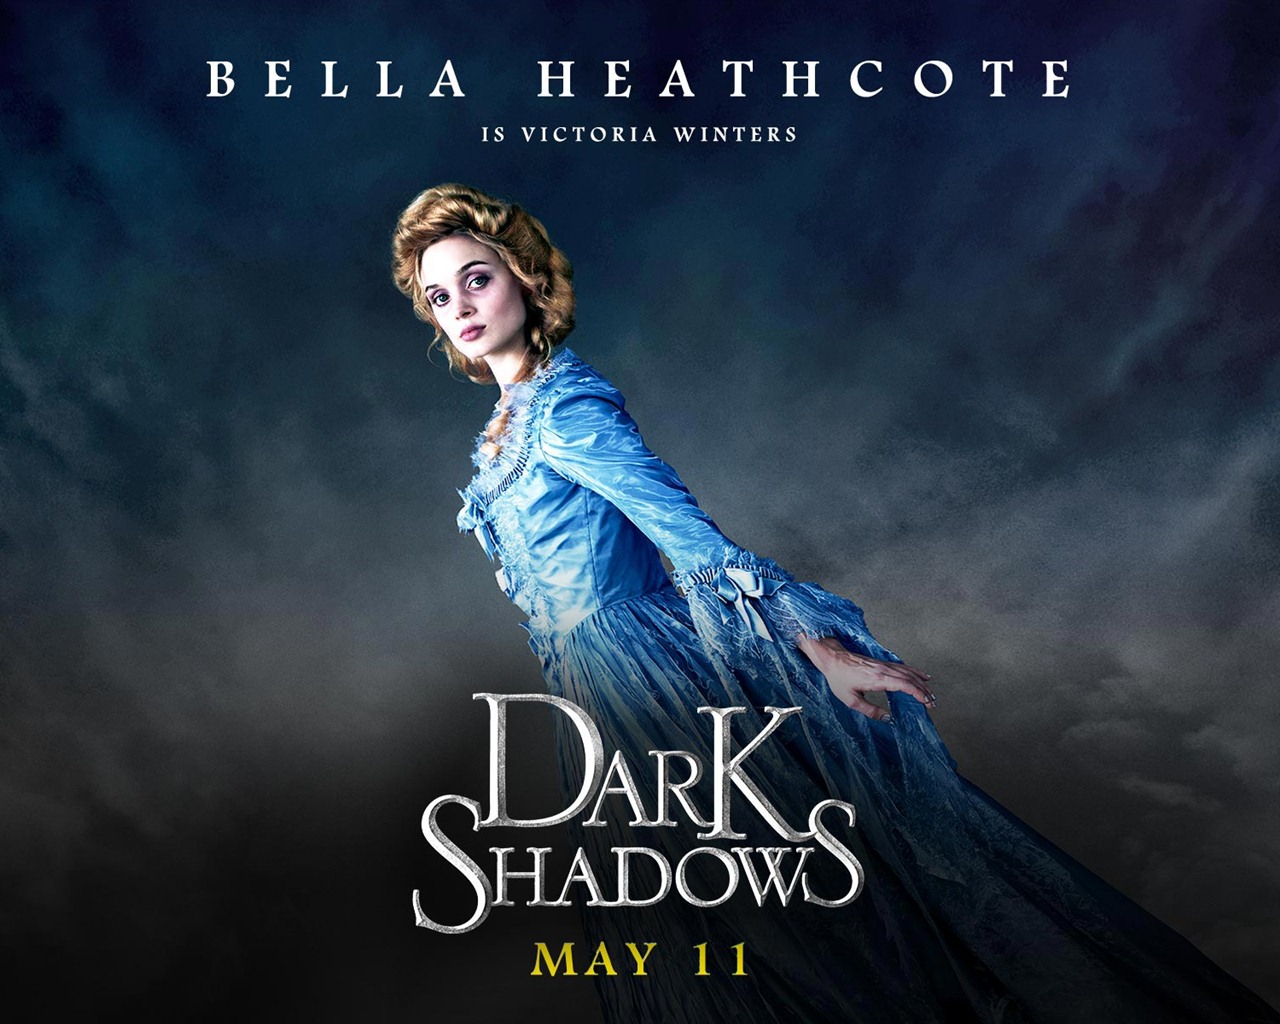 Bella Heathcote in Dark Shadows movie wallpapers - 1280x1024